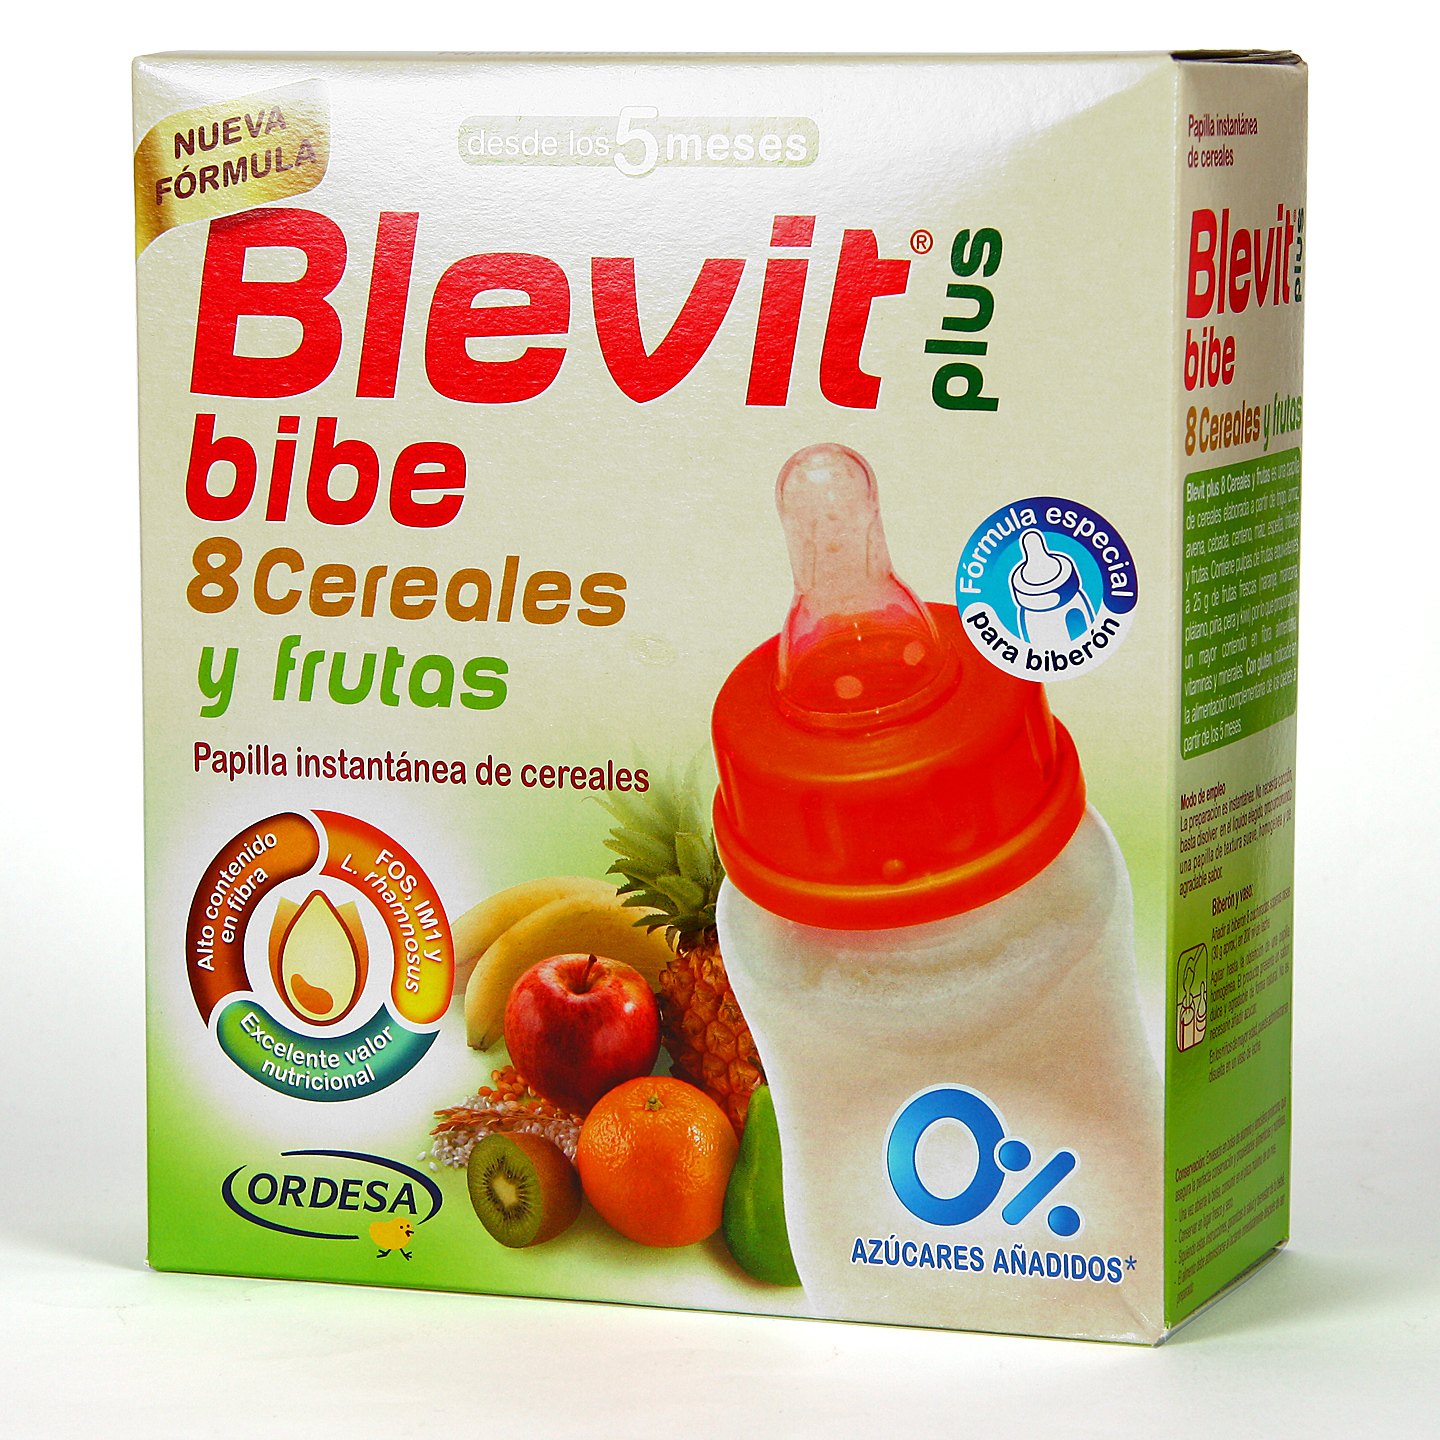 https://farmaciajimenez.com/storage/products/blevit-plus-bibe-8-cereales-y-fruta-600-g/blevit-plus-bibe-8-cereales-y-frutas-sin-azucares-600-g-1440.jpg